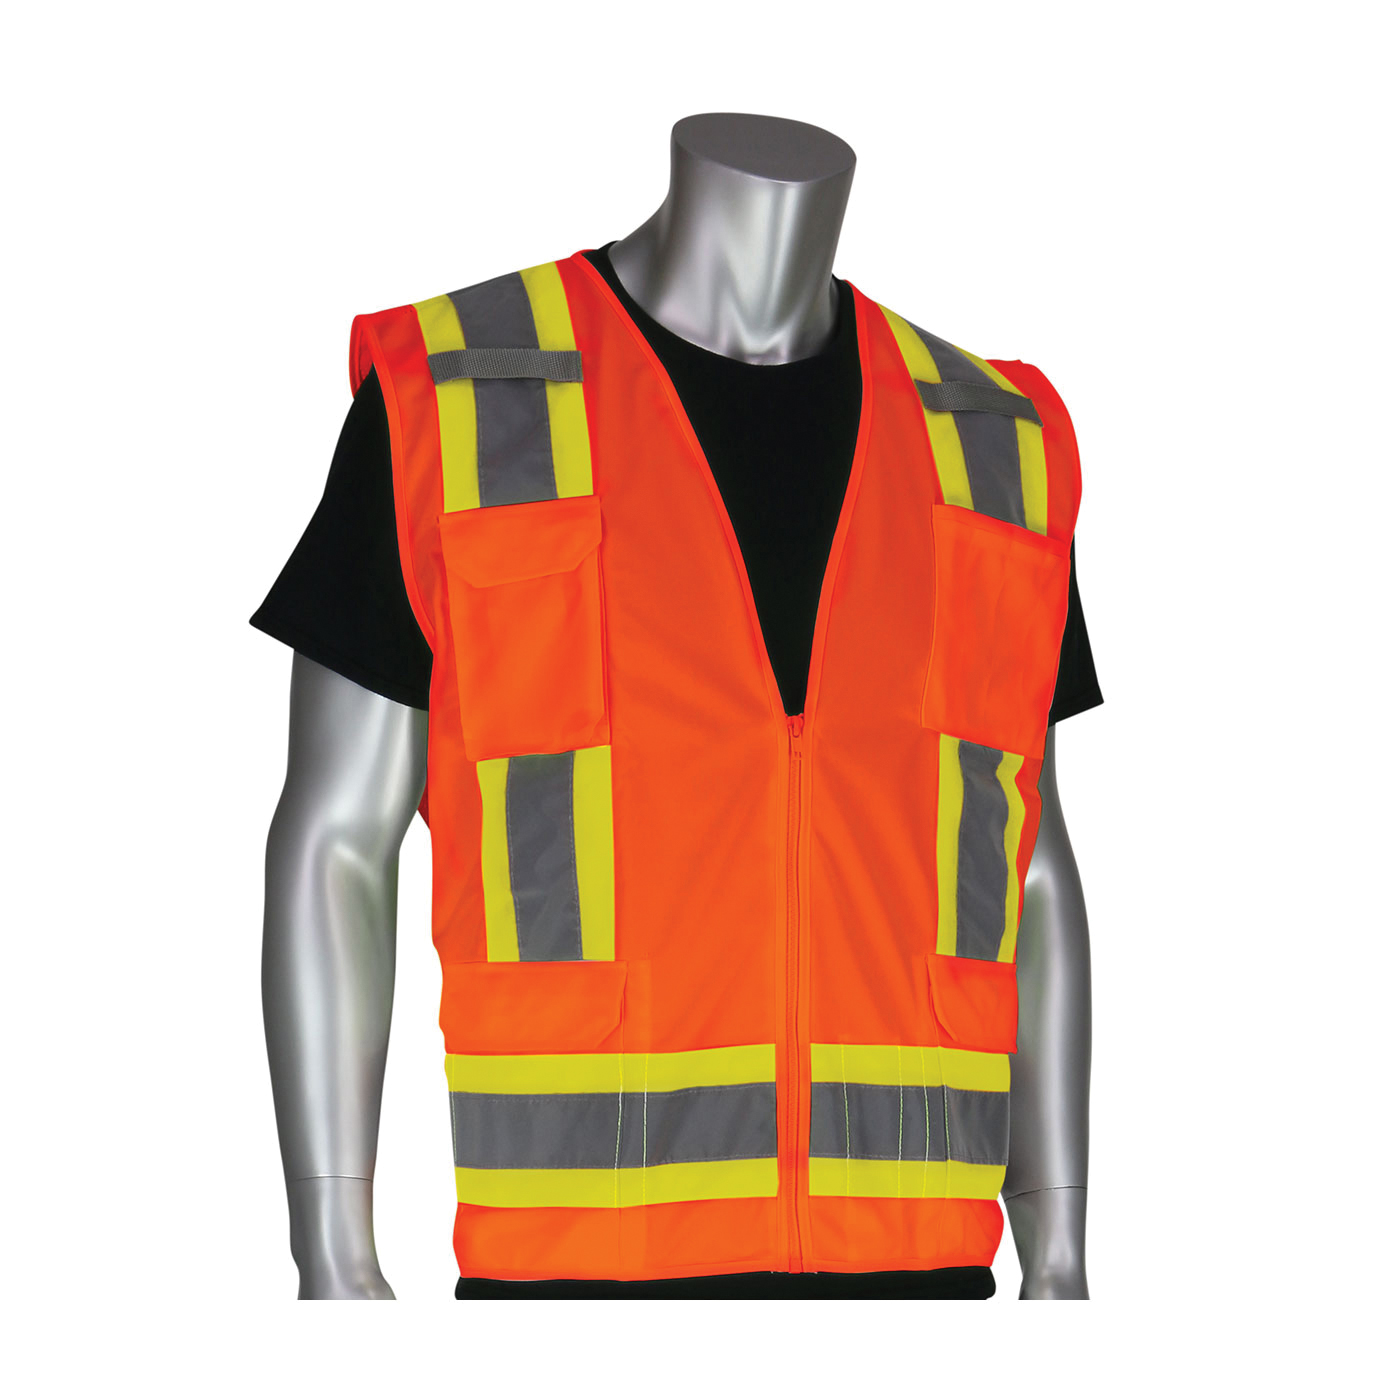 PIP® 302-0500-ORG/7X 2-Tone Surveyor Safety Vest, 7XL, Hi-Viz Orange, Polyester/Solid Tricot, Zipper Closure, 11 Pockets, ANSI Class: Class 2, Specifications Met: ANSI 107 Type R